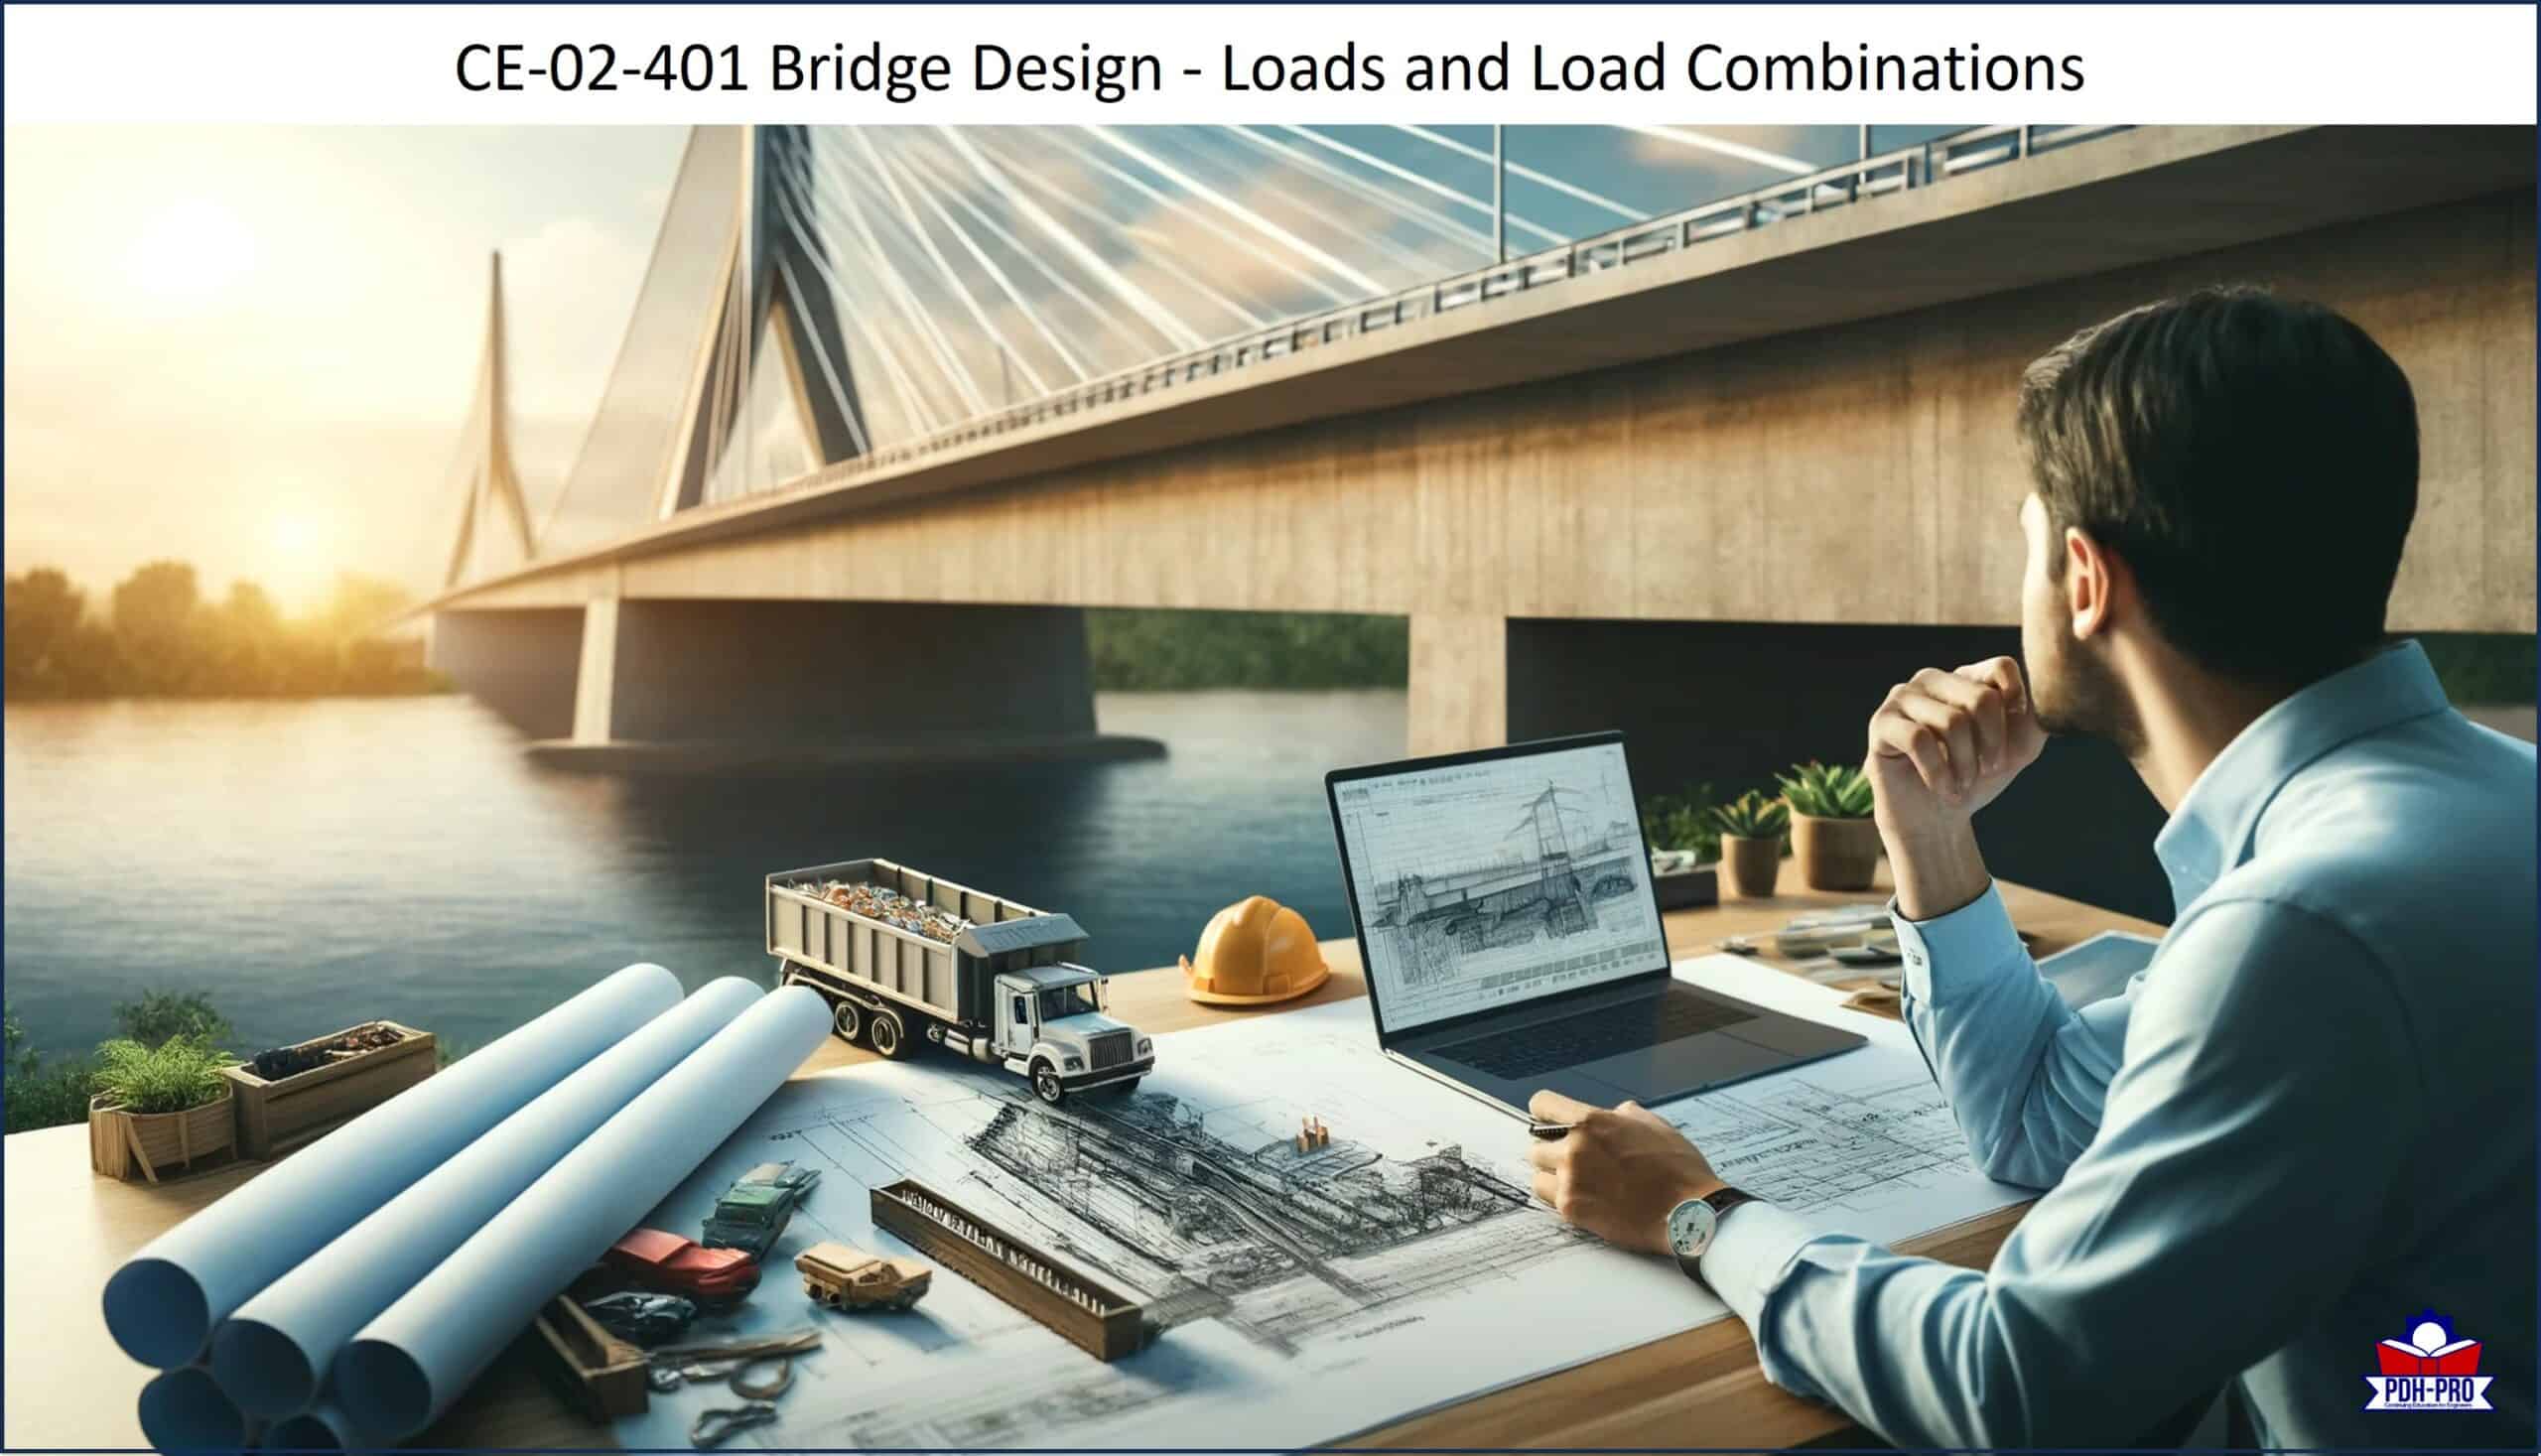 Bridge Design - Loads and Load Combinations